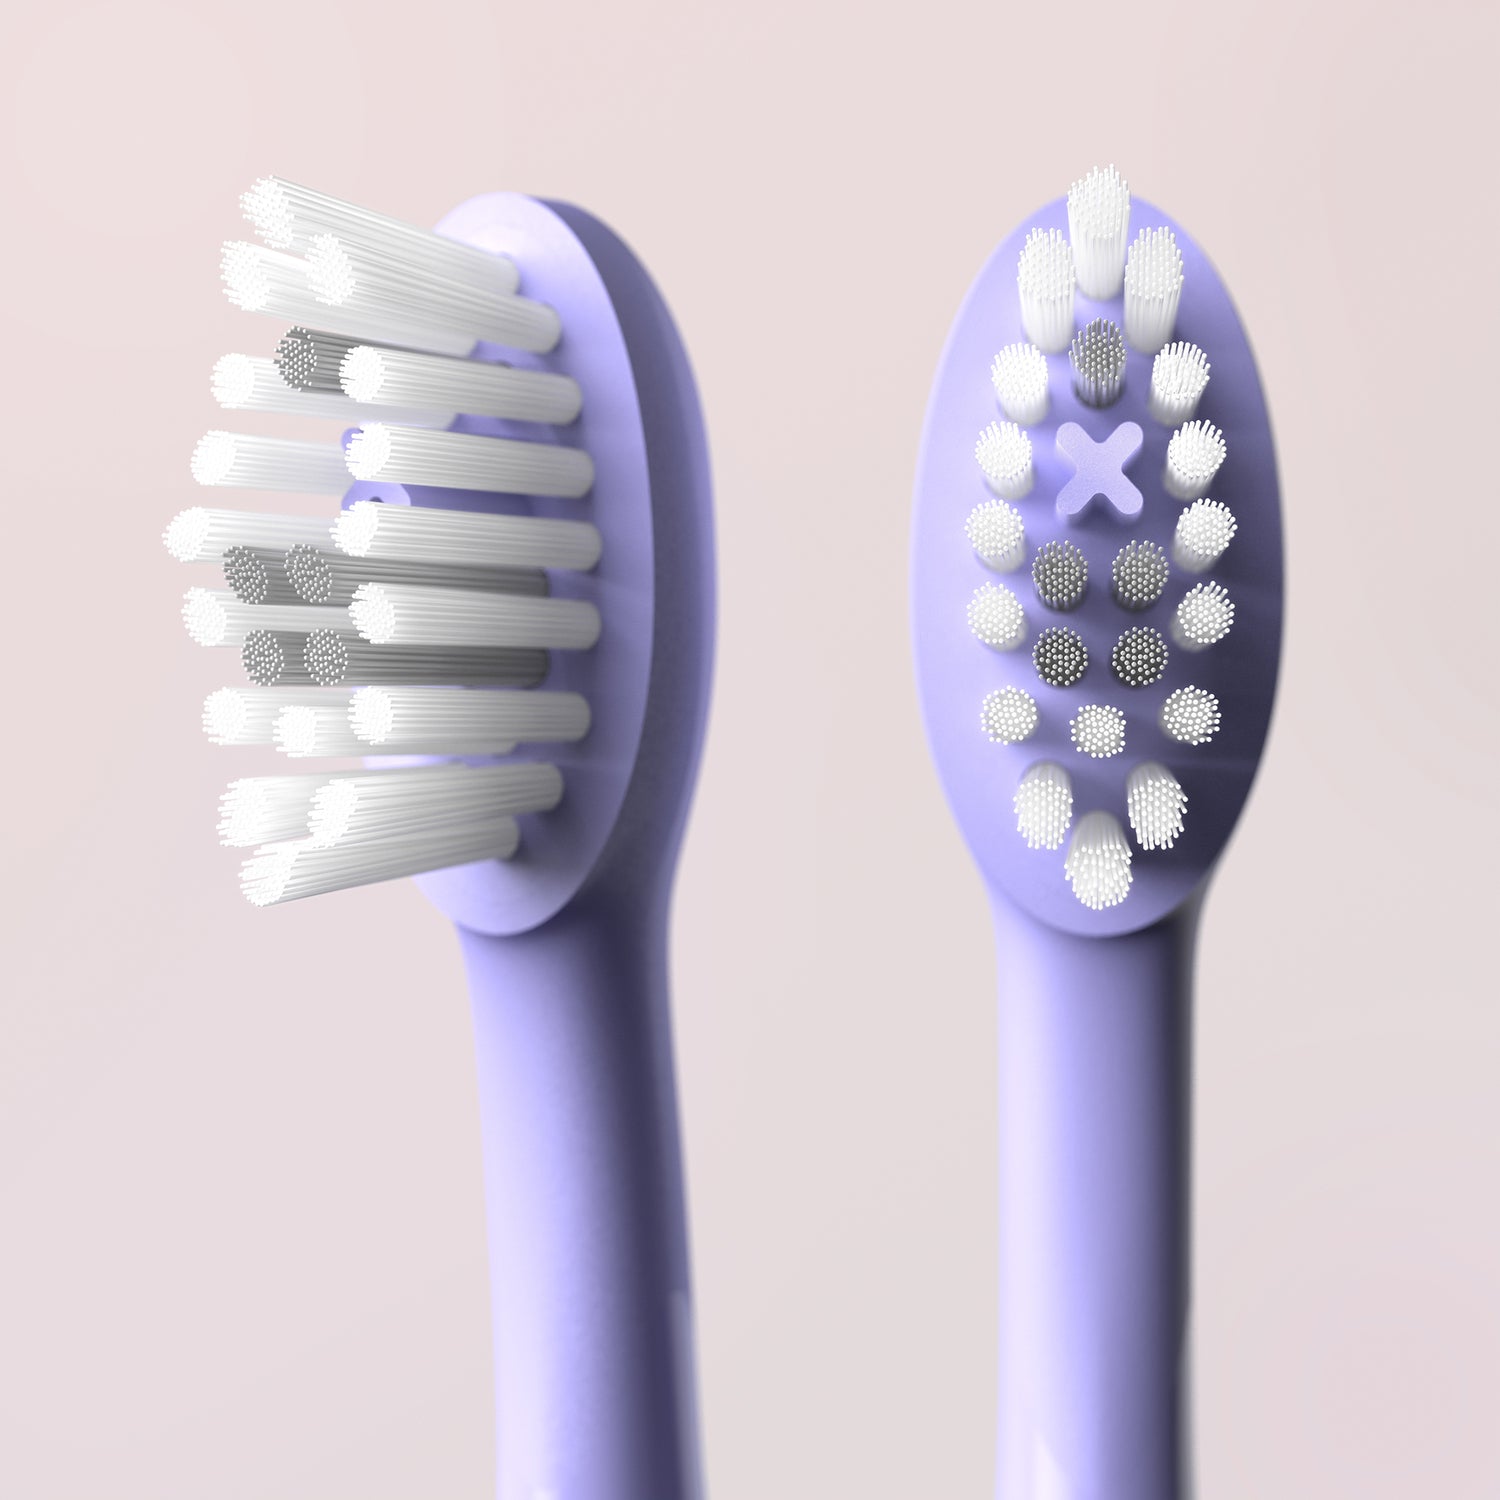 Ordo Sonic+ Toothbrush &amp; Case Violet